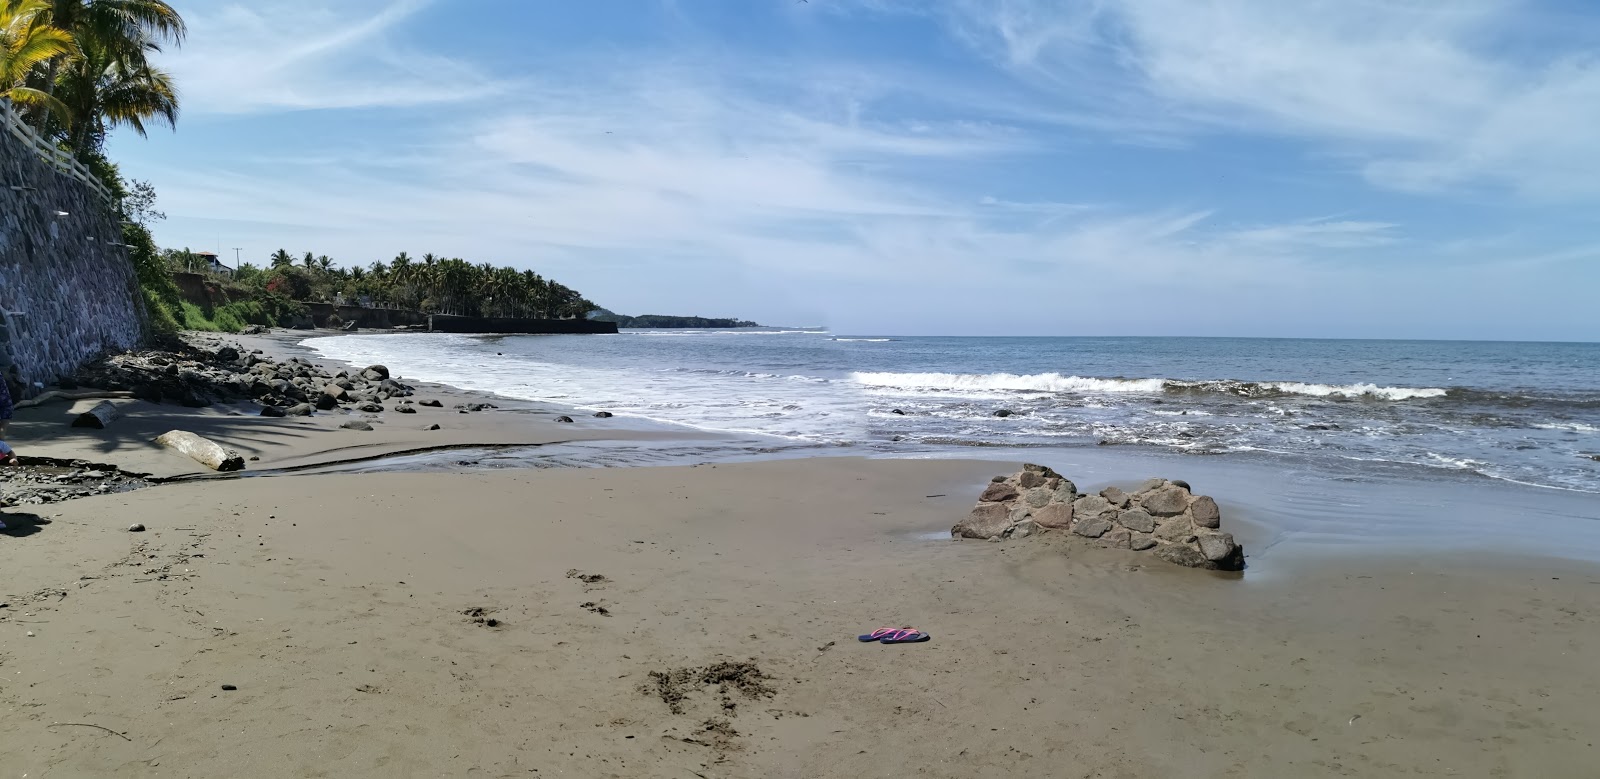 Fotografija La Manzanilla beach z siv pesek površino